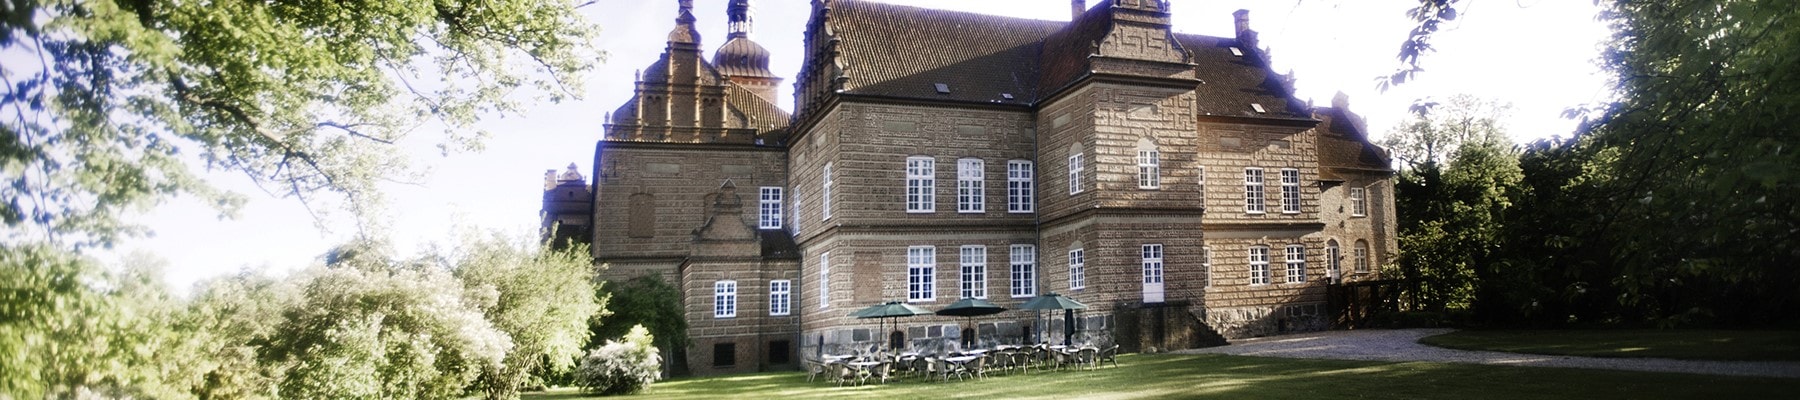 Holckenhavn Slot konferencelokaler på Fyn